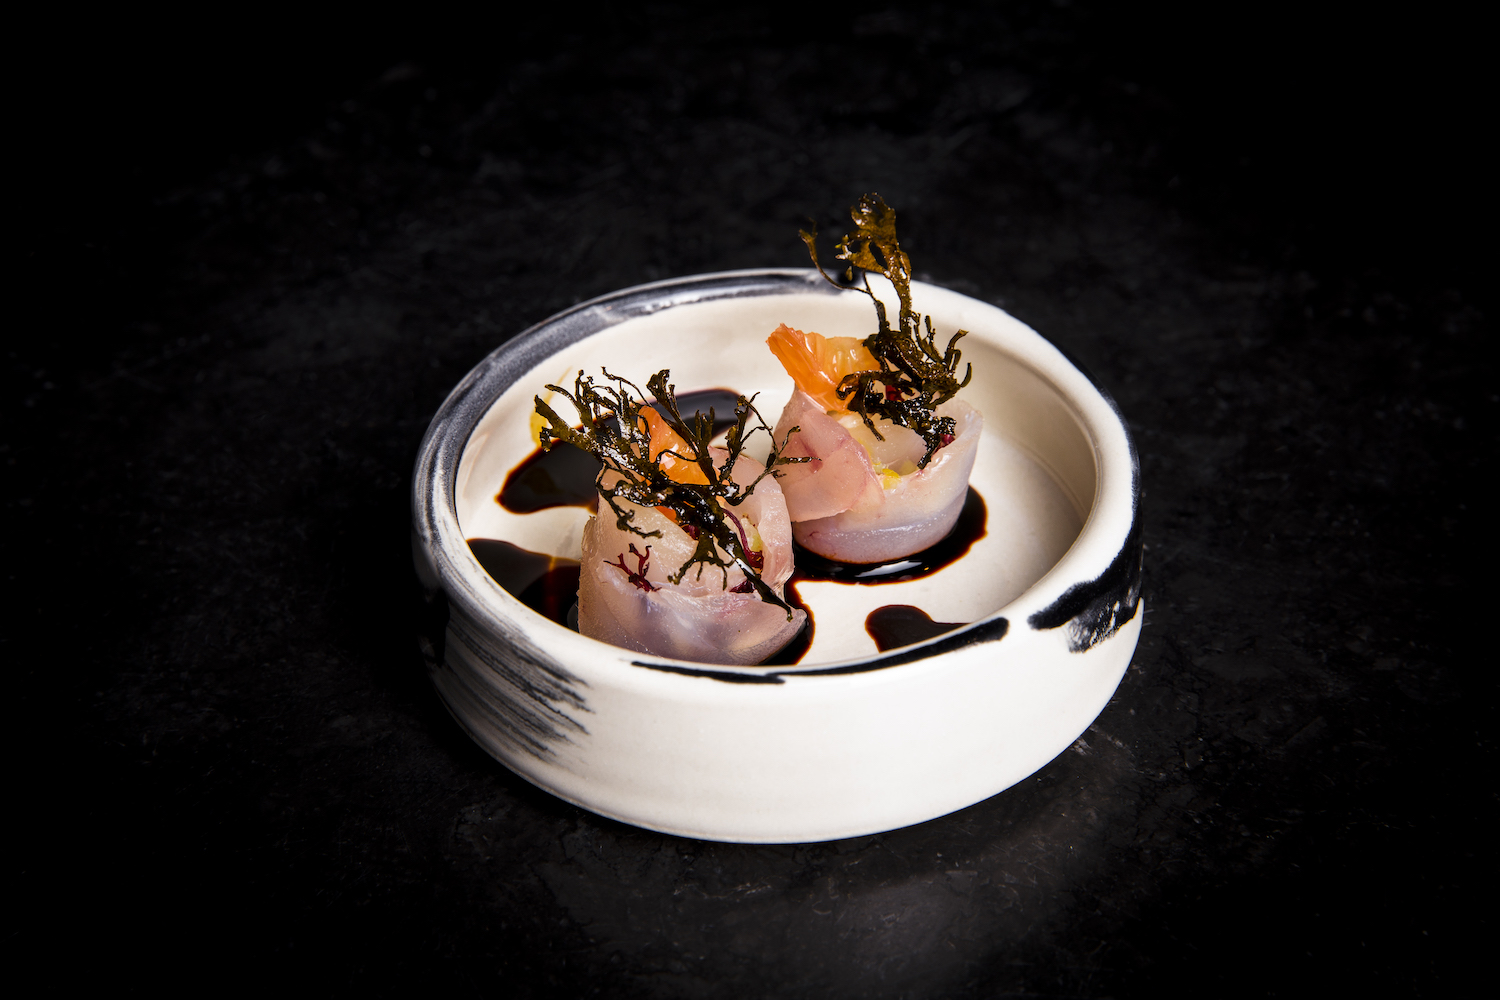 Sushi-shaped food on a dish